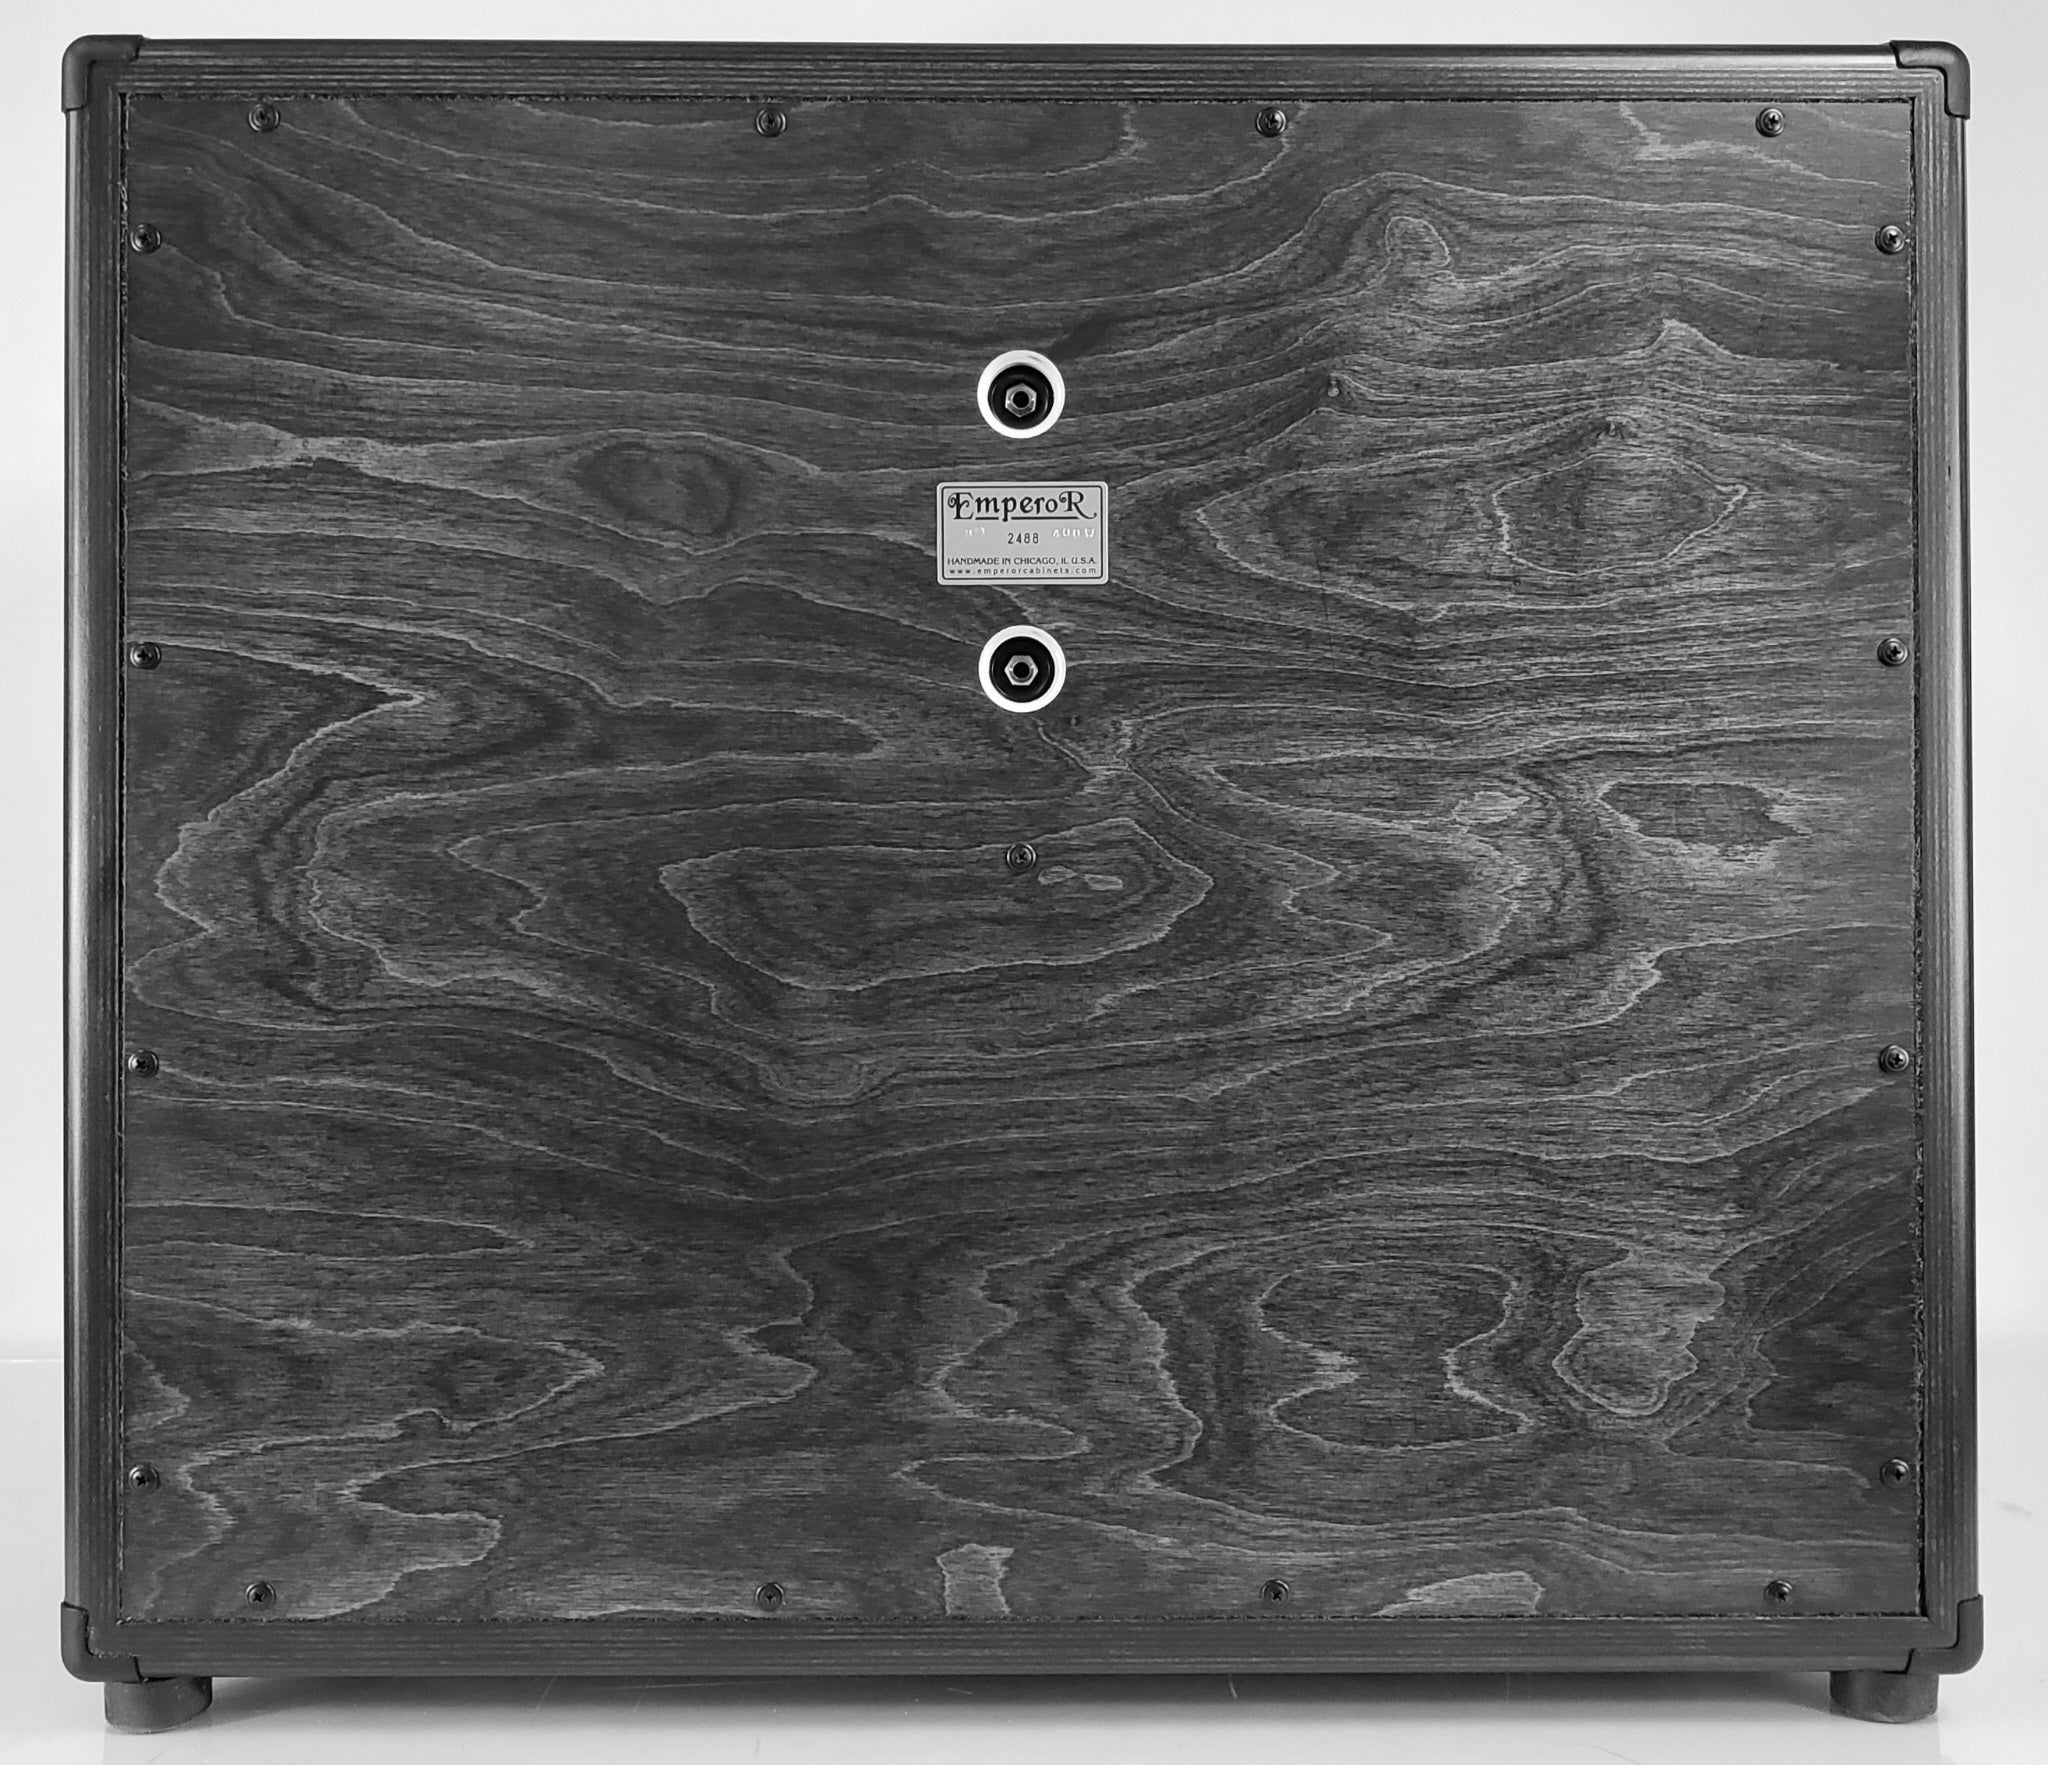 Standard 2x12 XL Bass Cabinet - Emperor Cabinets